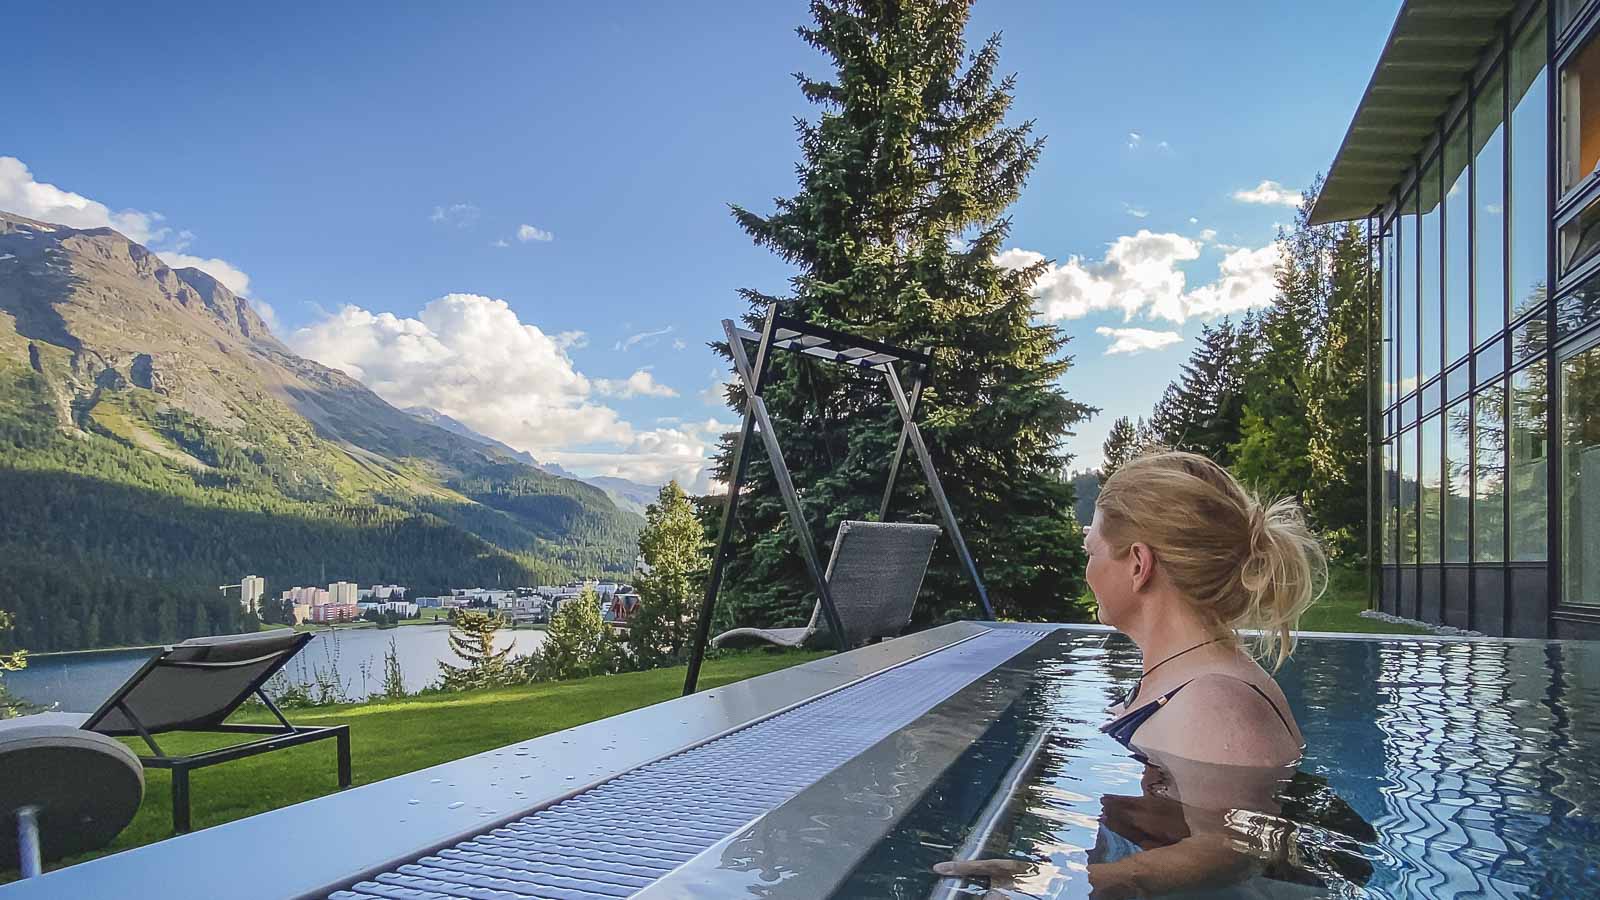 https://theplanetd.com/images/St-Moritz-Switzerland-summer-things-to-do.jpg